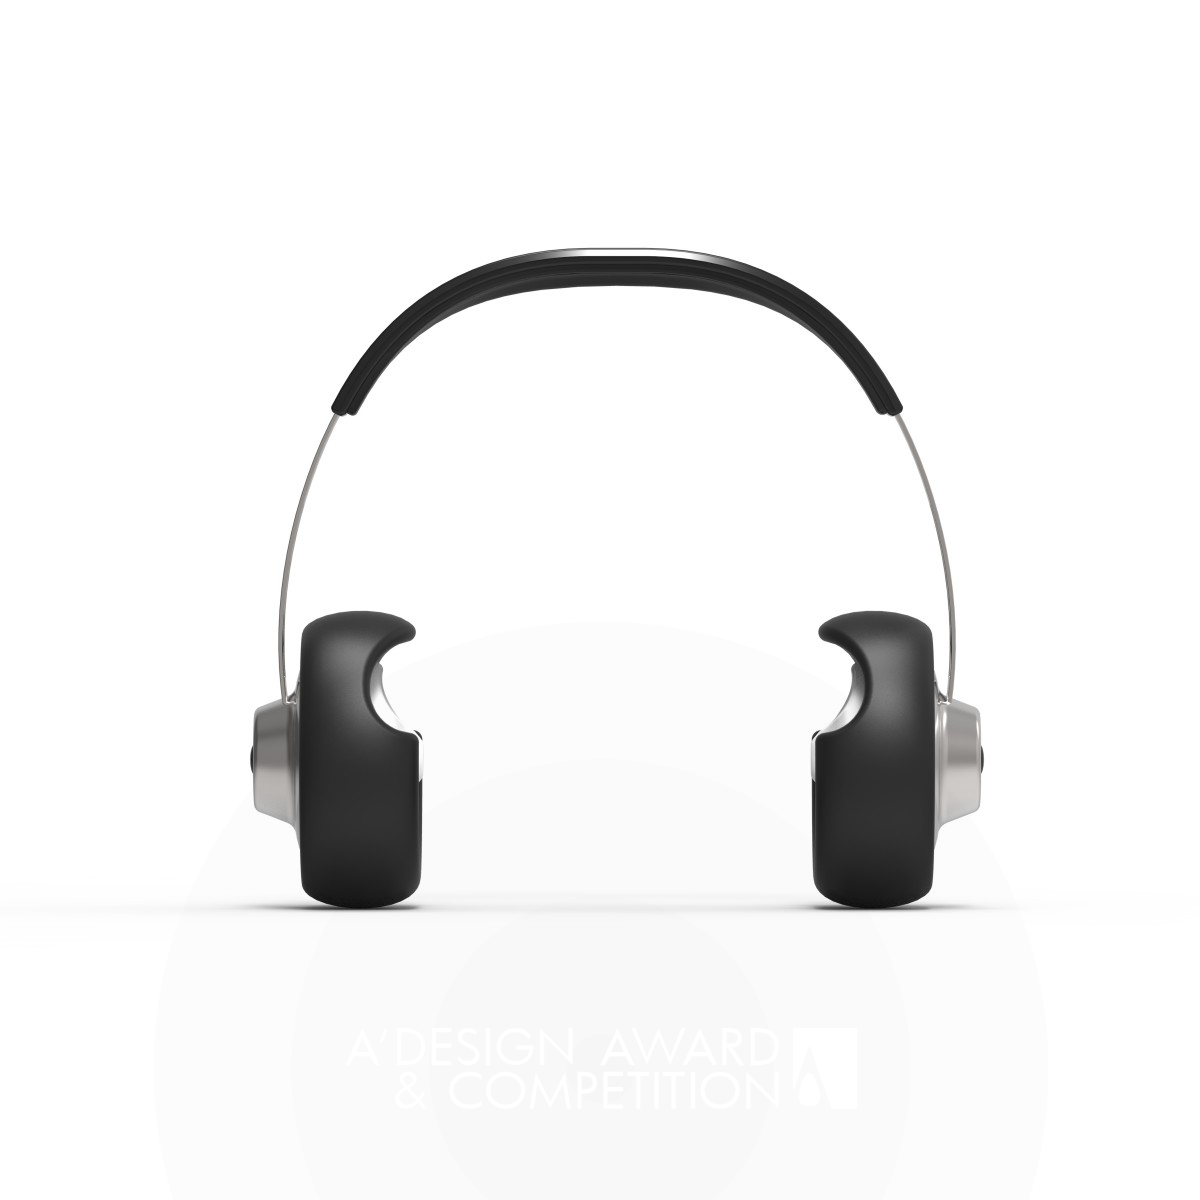 Headset Comfortale headset by Wang JiongJiong